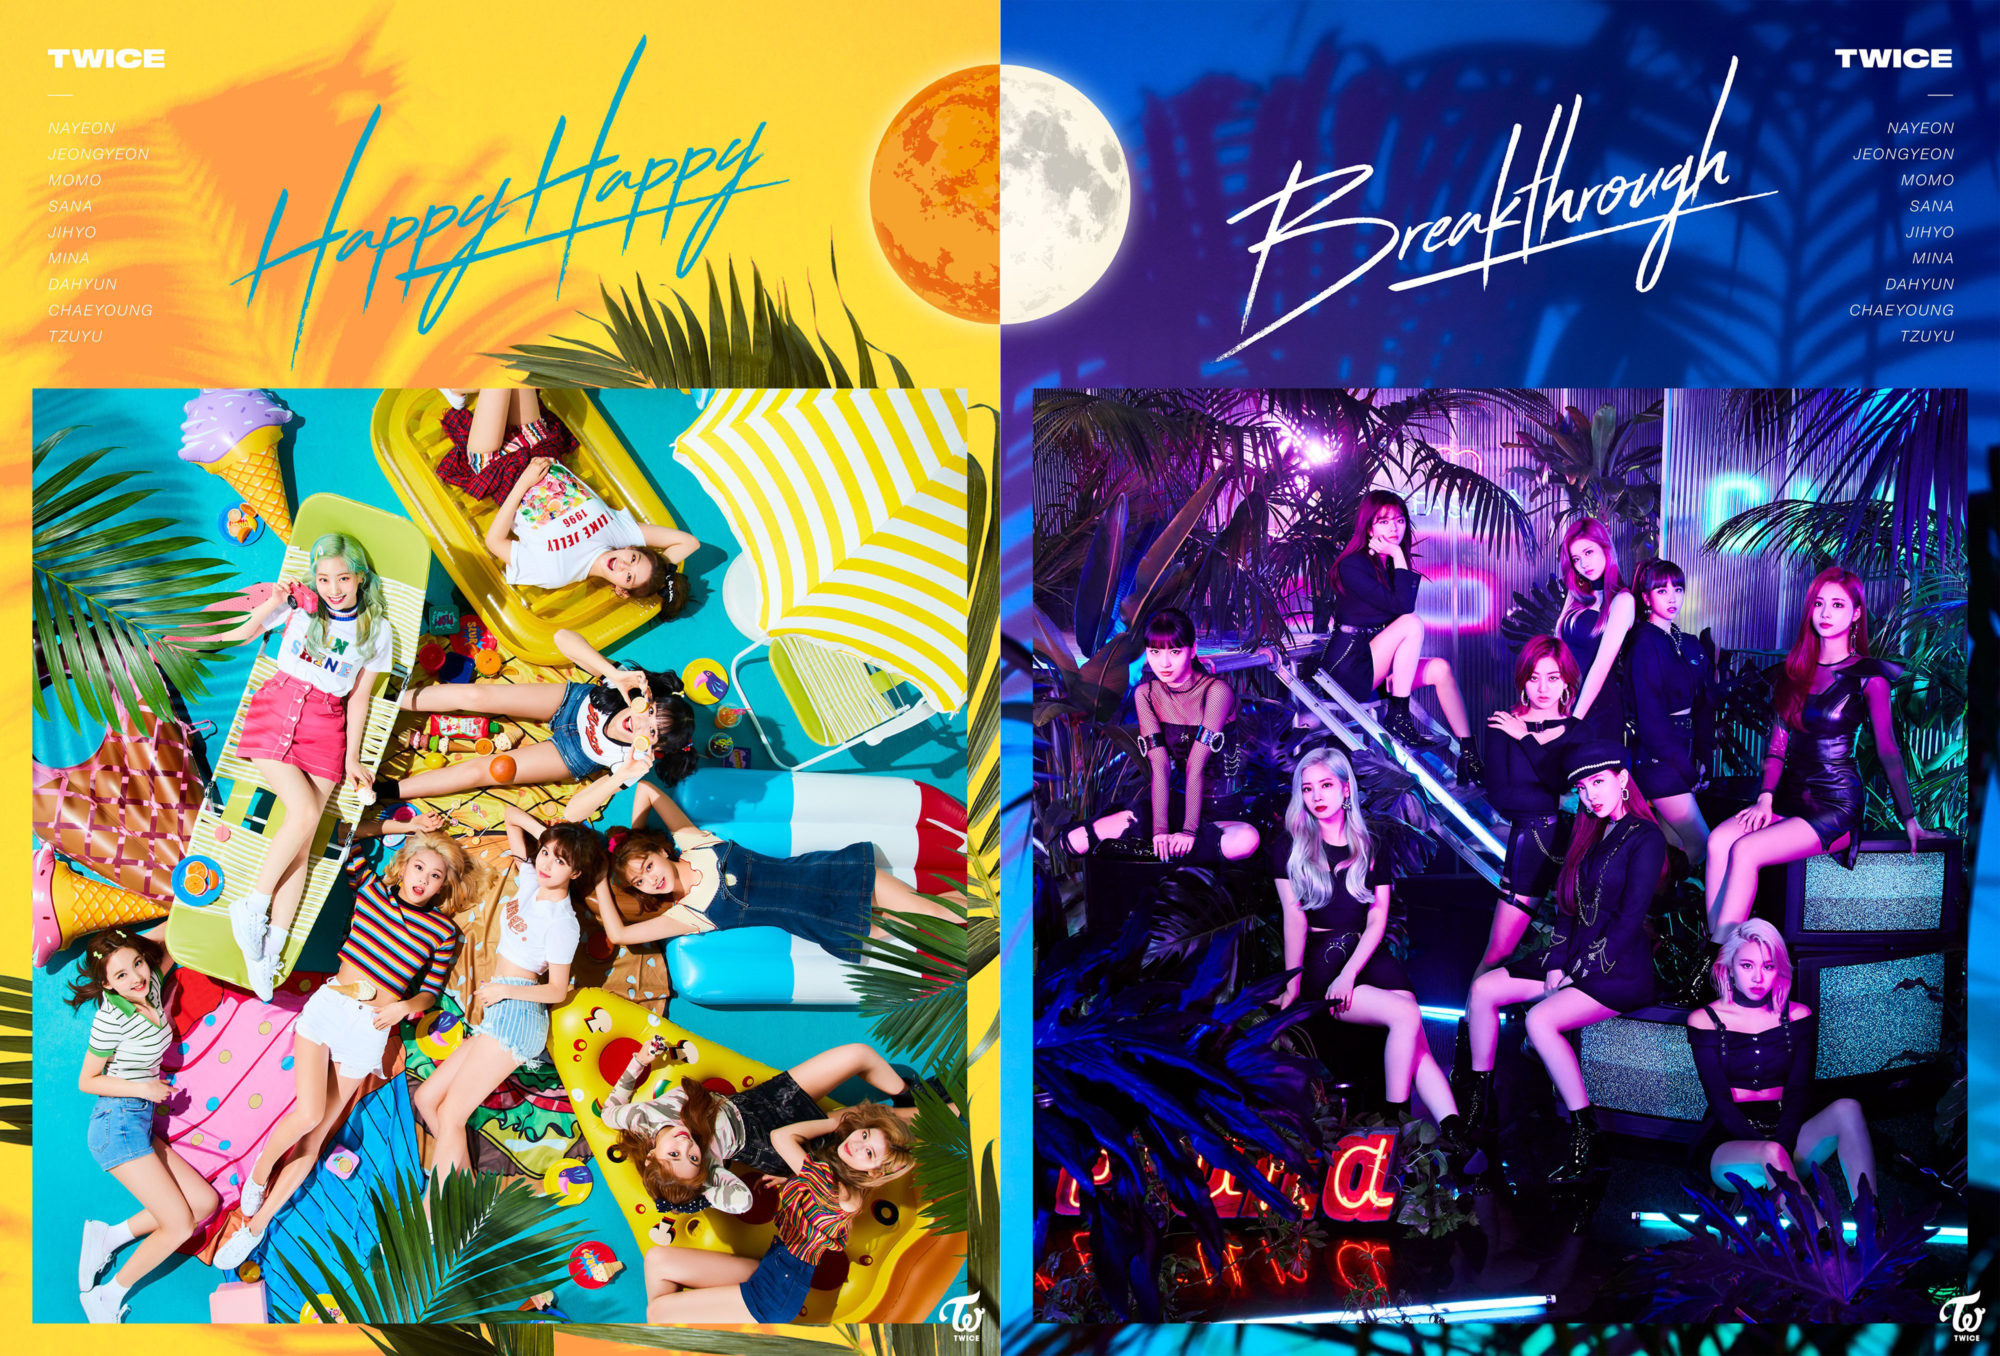 Twice Happy Happy / Breakthrough Album Covers (HD/HR) - K-Pop 